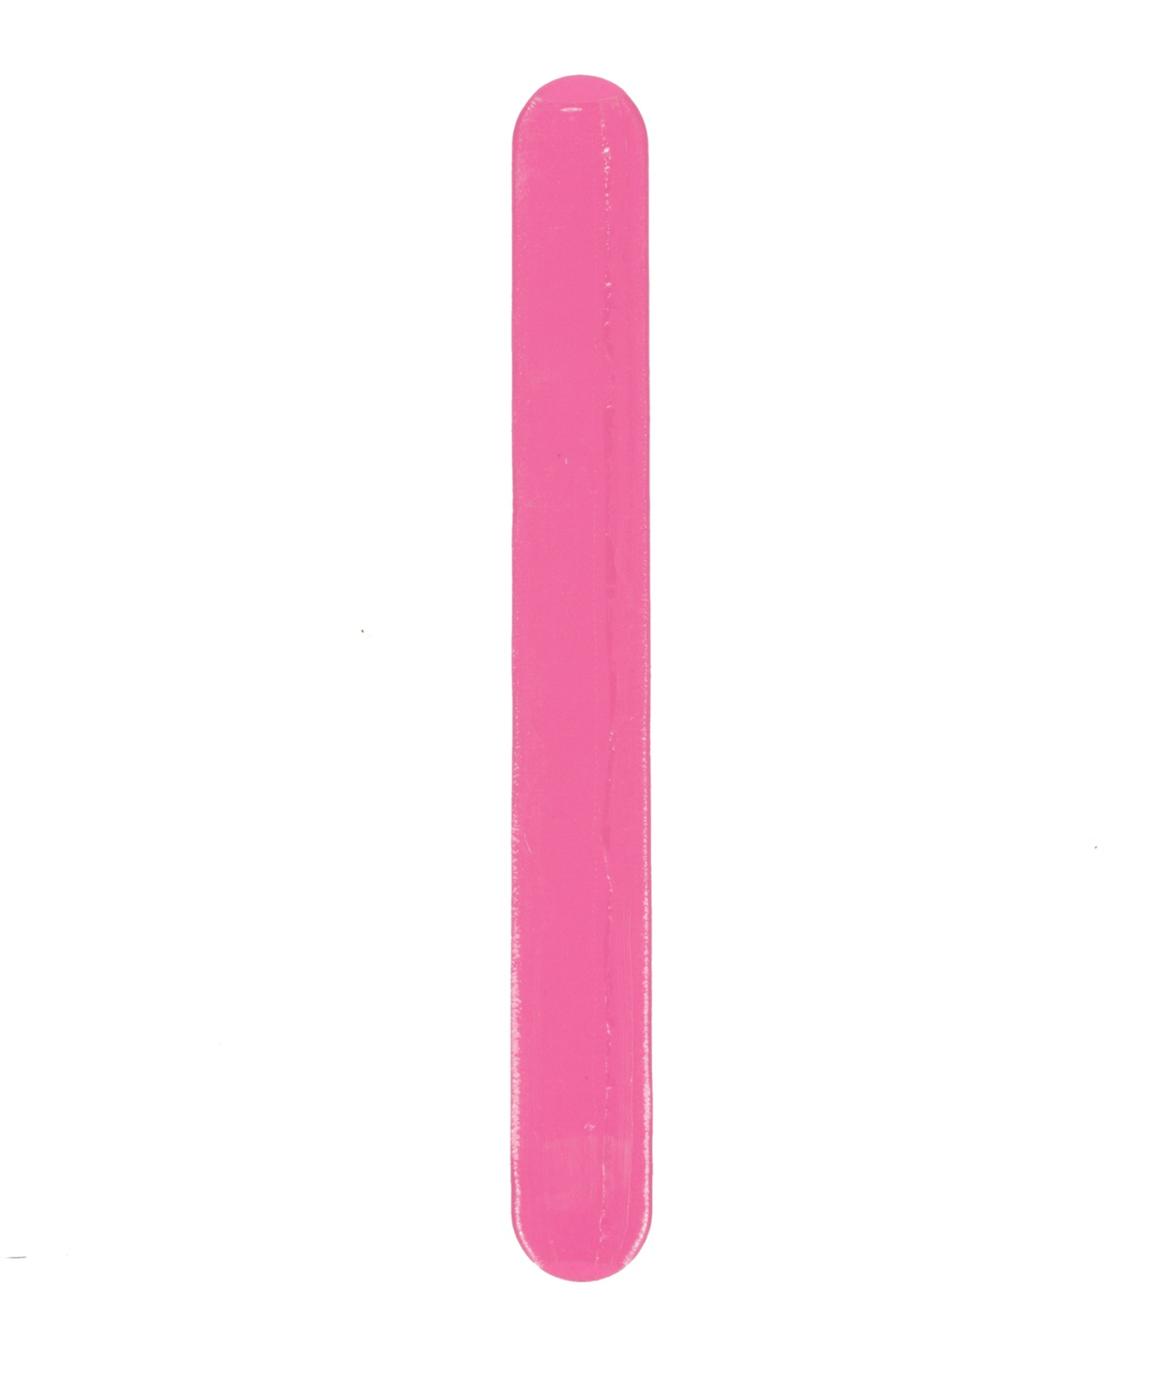 H-E-B Professional Pink Salon Board; image 2 of 2